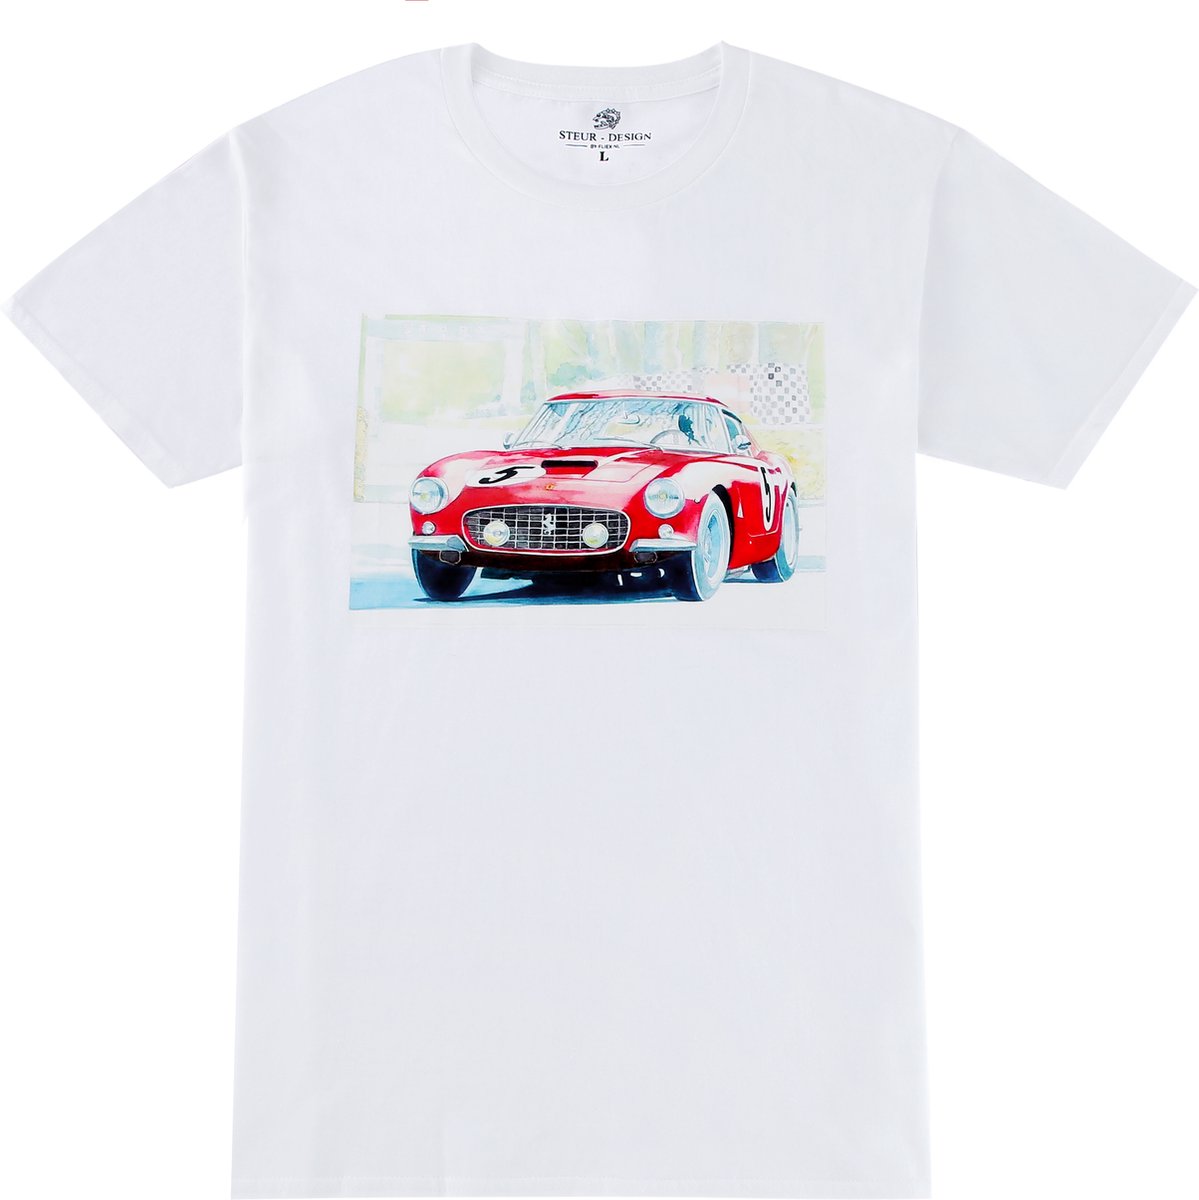 STEUR - DESIGN - T-shirt - wit - katoen - klassieke Ferrari - XXL